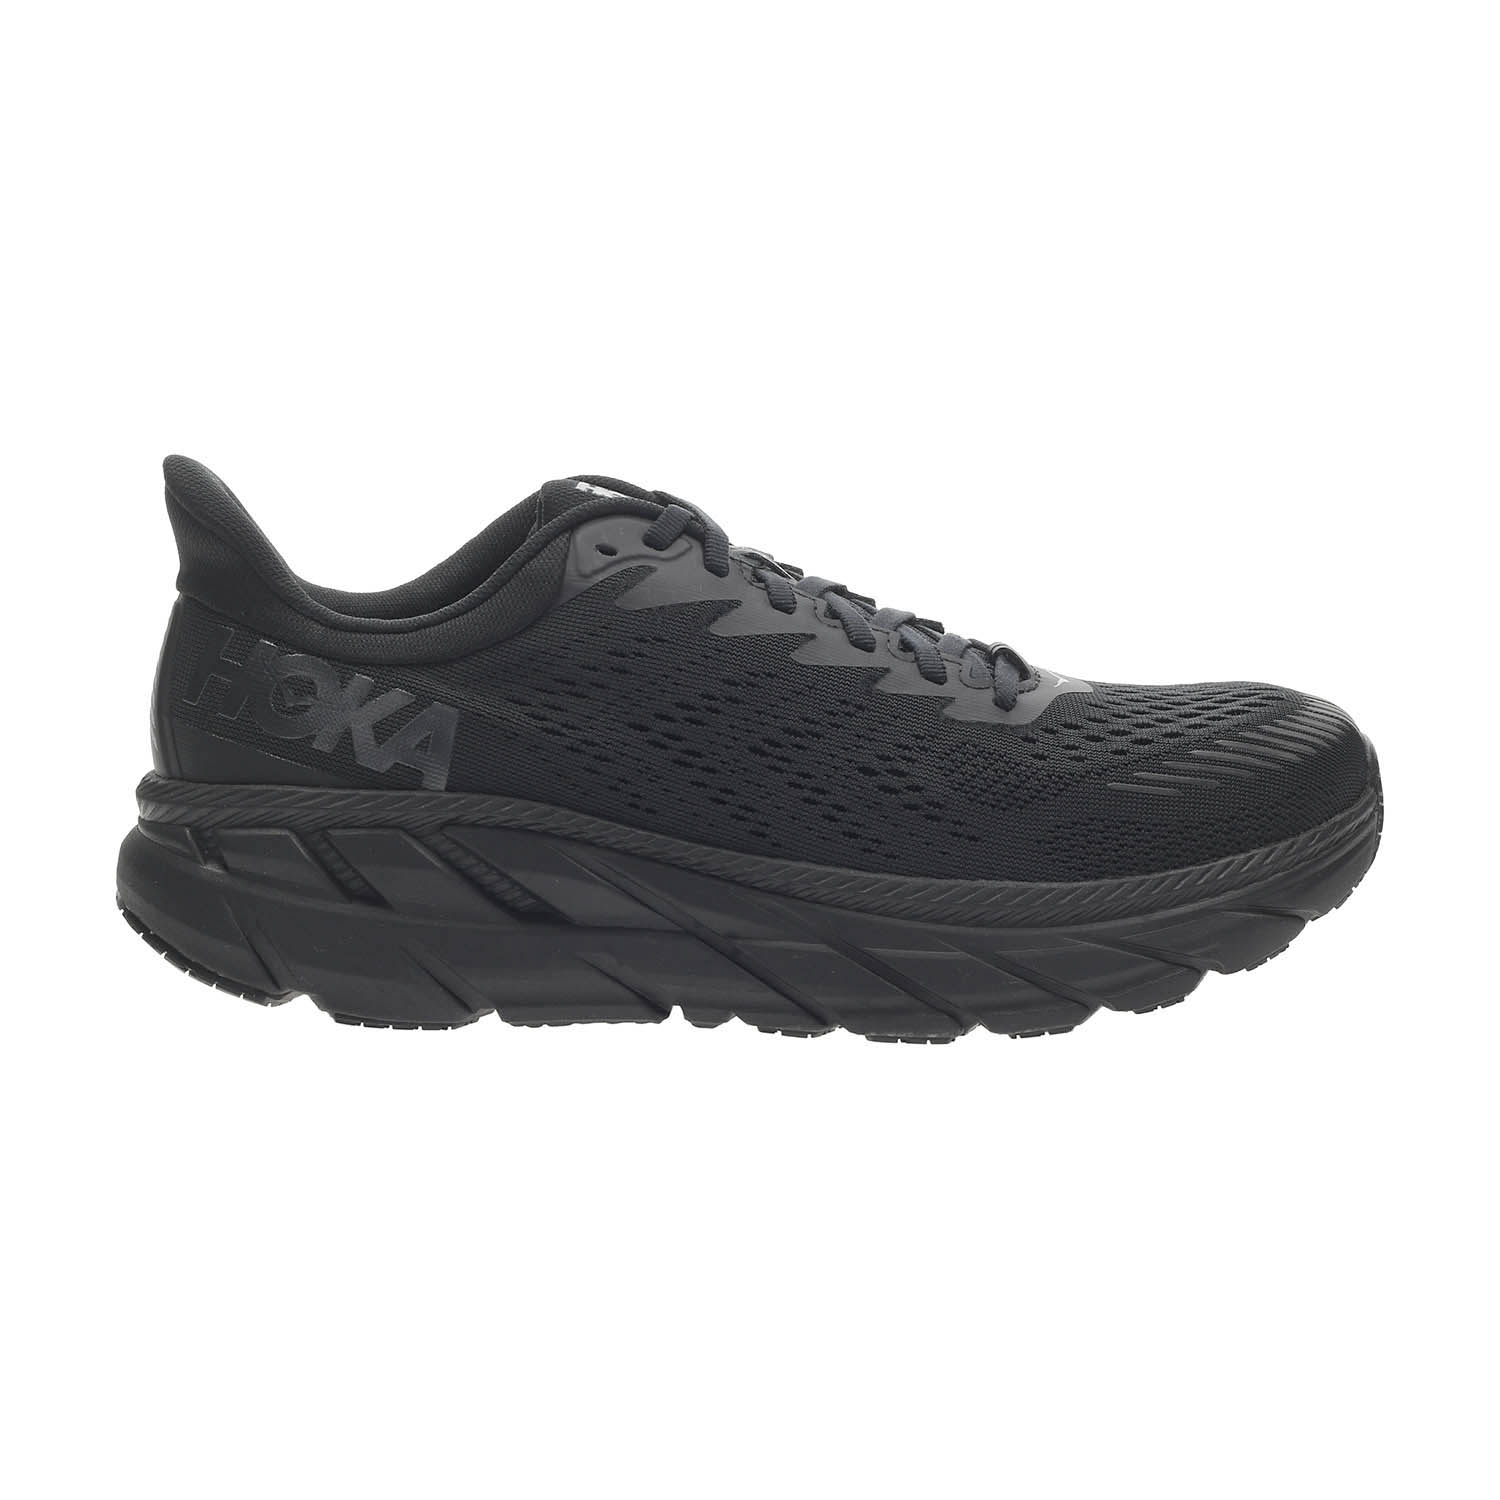 Hoka One One Clifton 7 Men's Running Shoes - Black